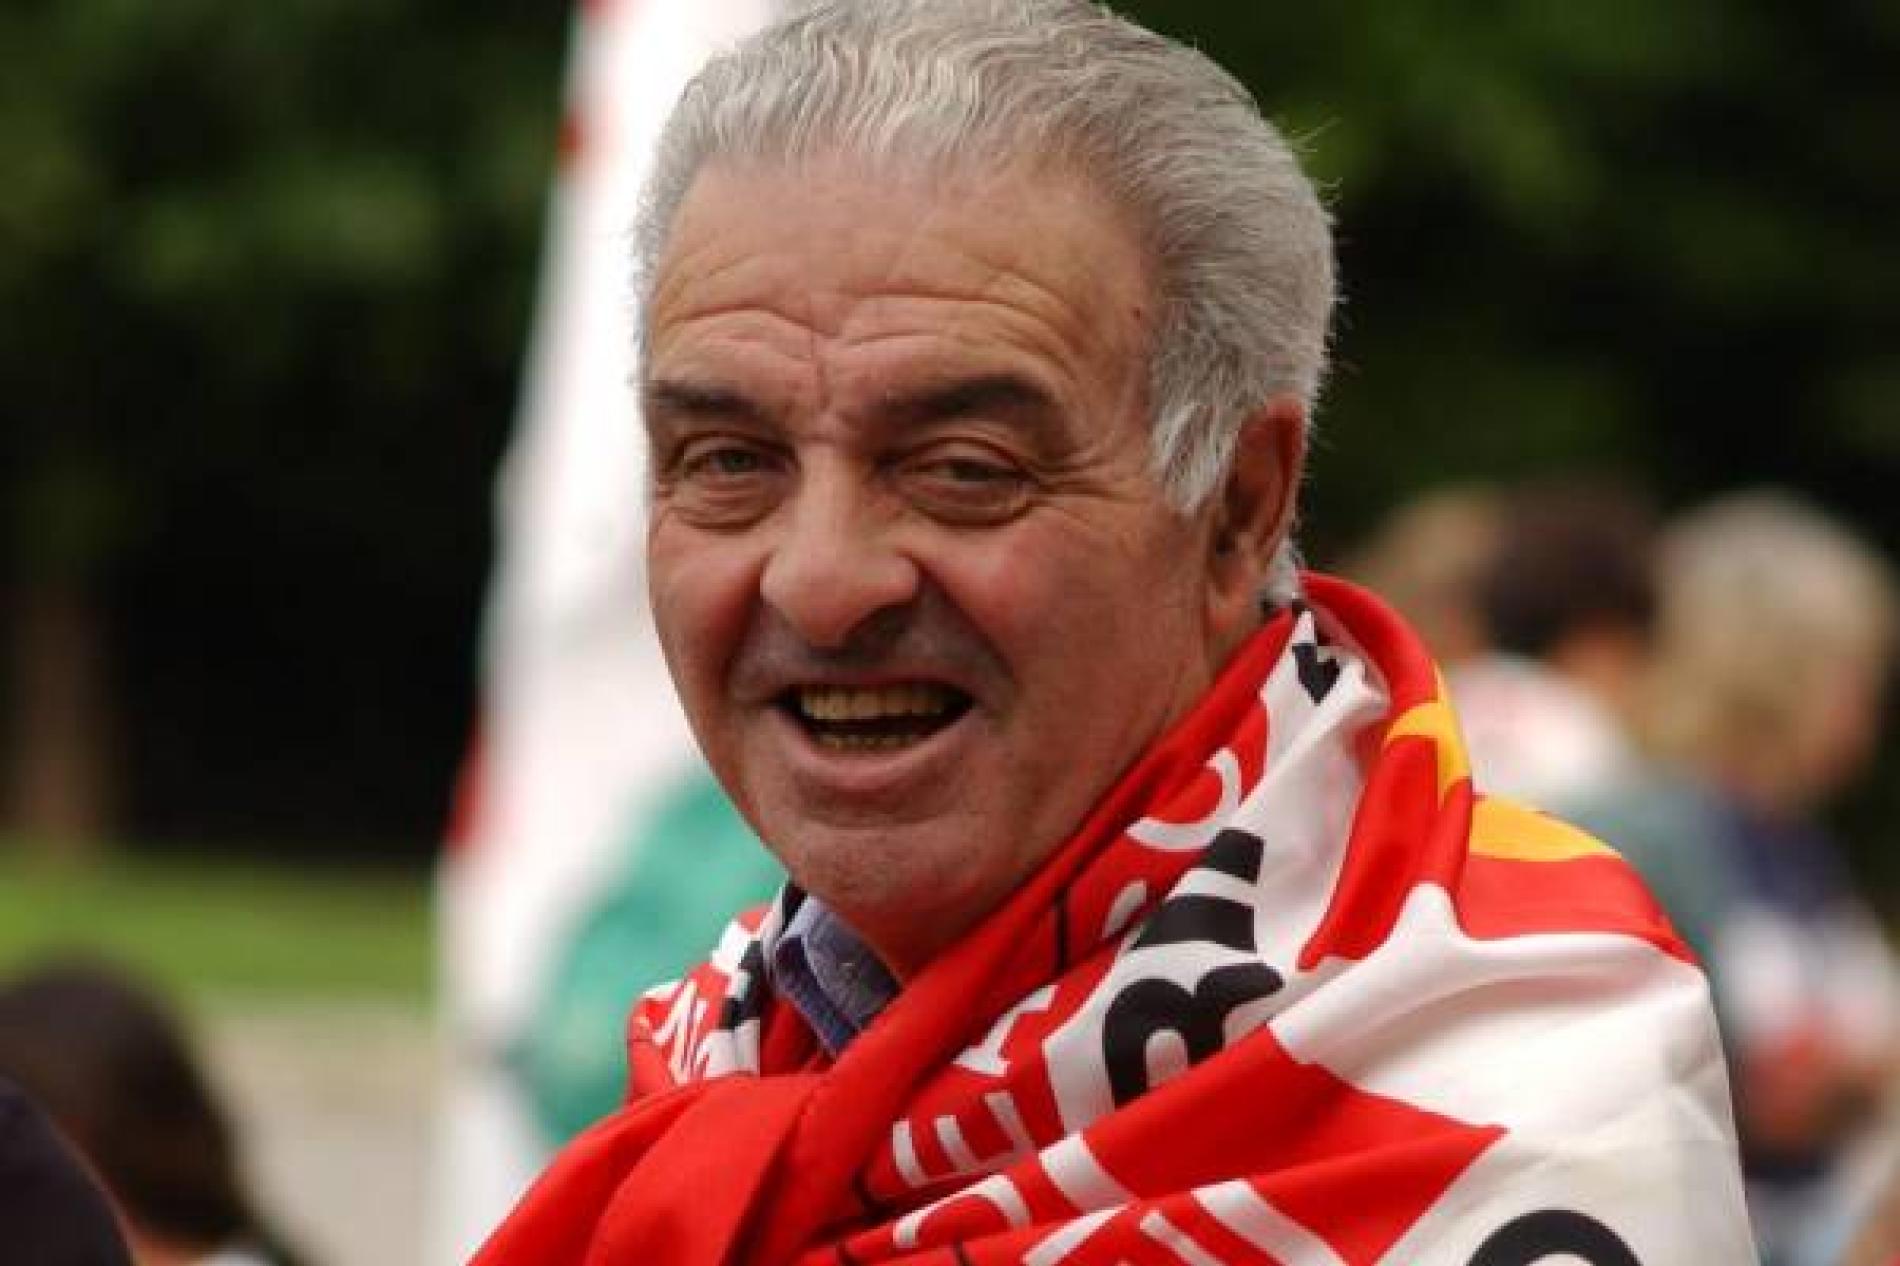 Addio a Gianni Malfettani, una vita per politica e sport